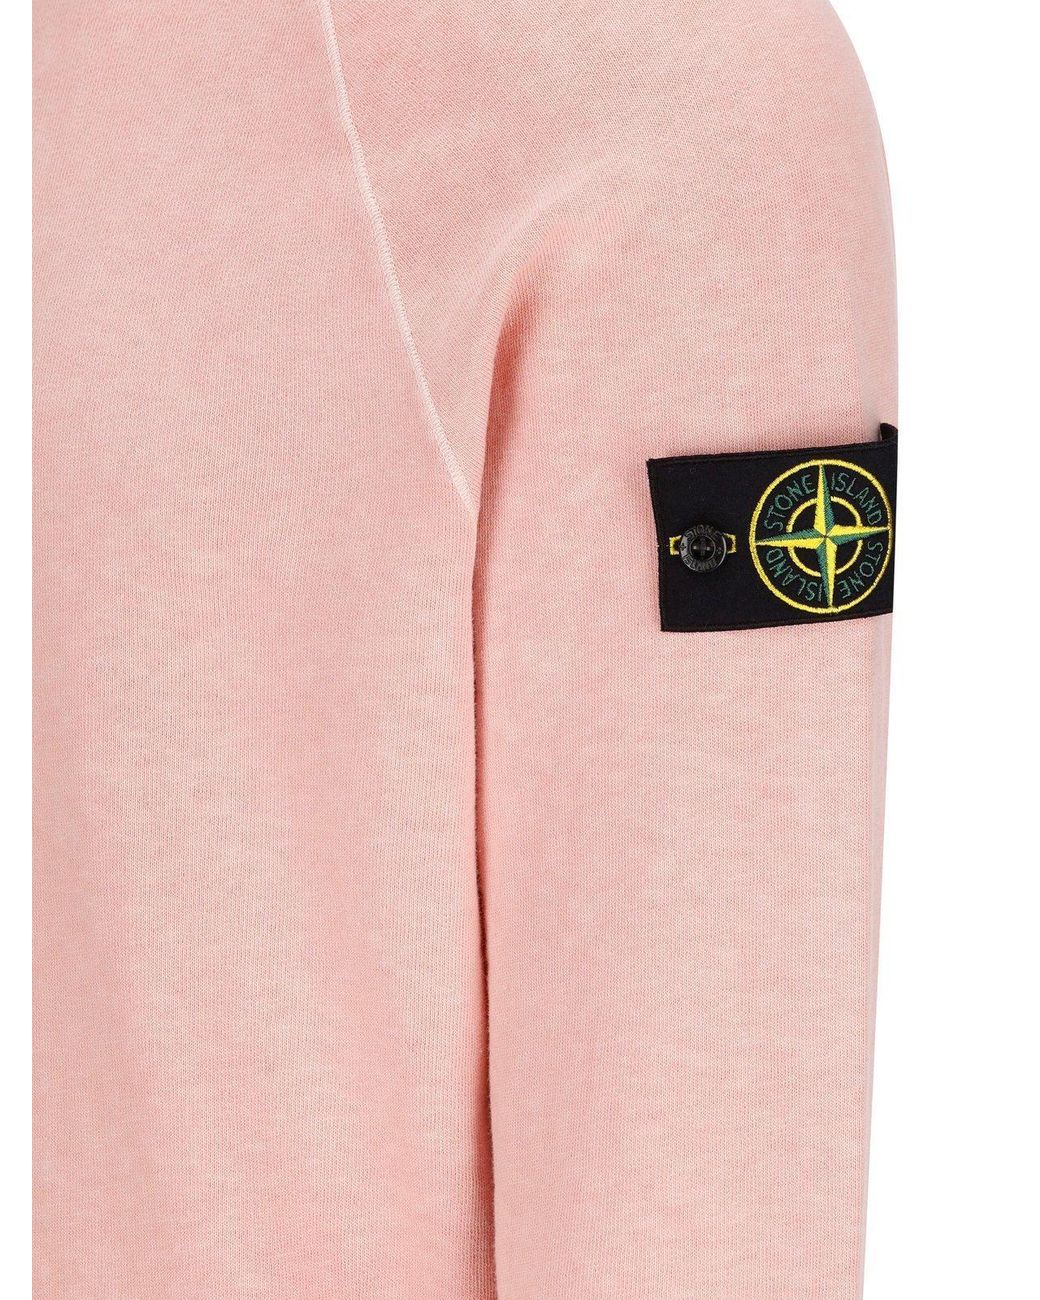 Stone Island Sweatshirt in Pink for Men | Lyst